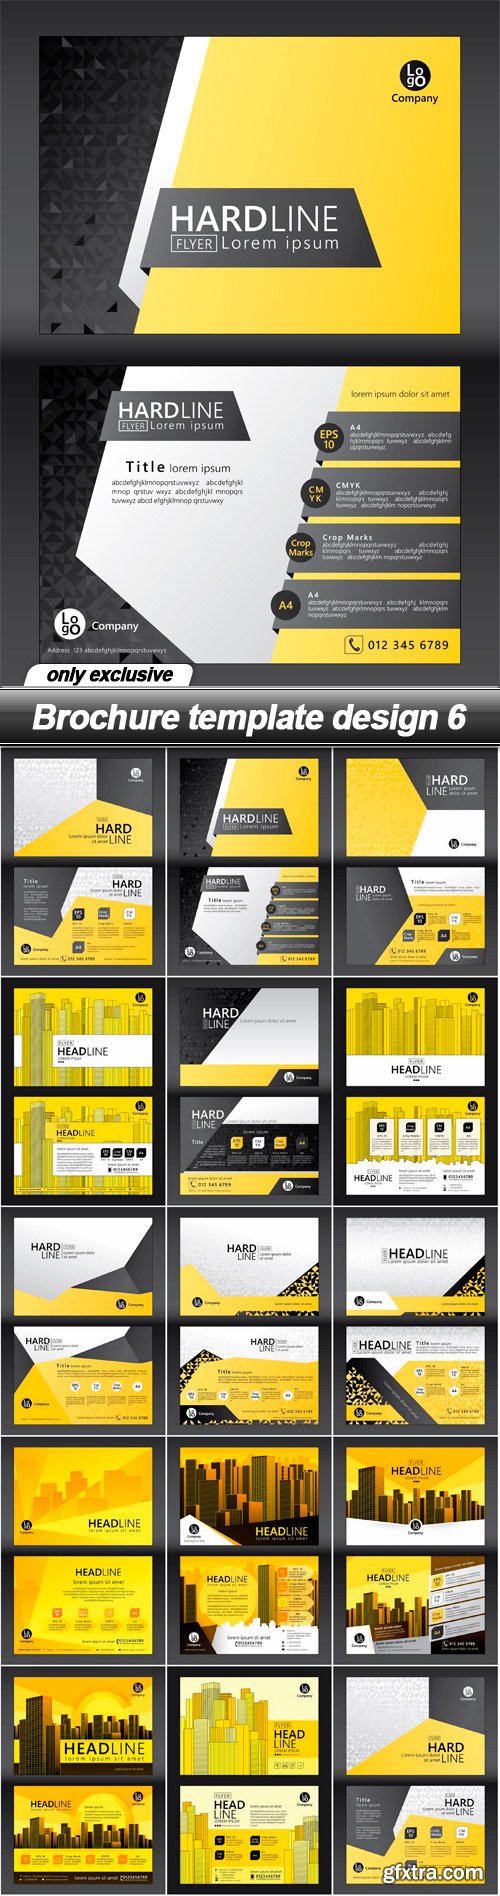 Brochure template design 6 - 14 EPS